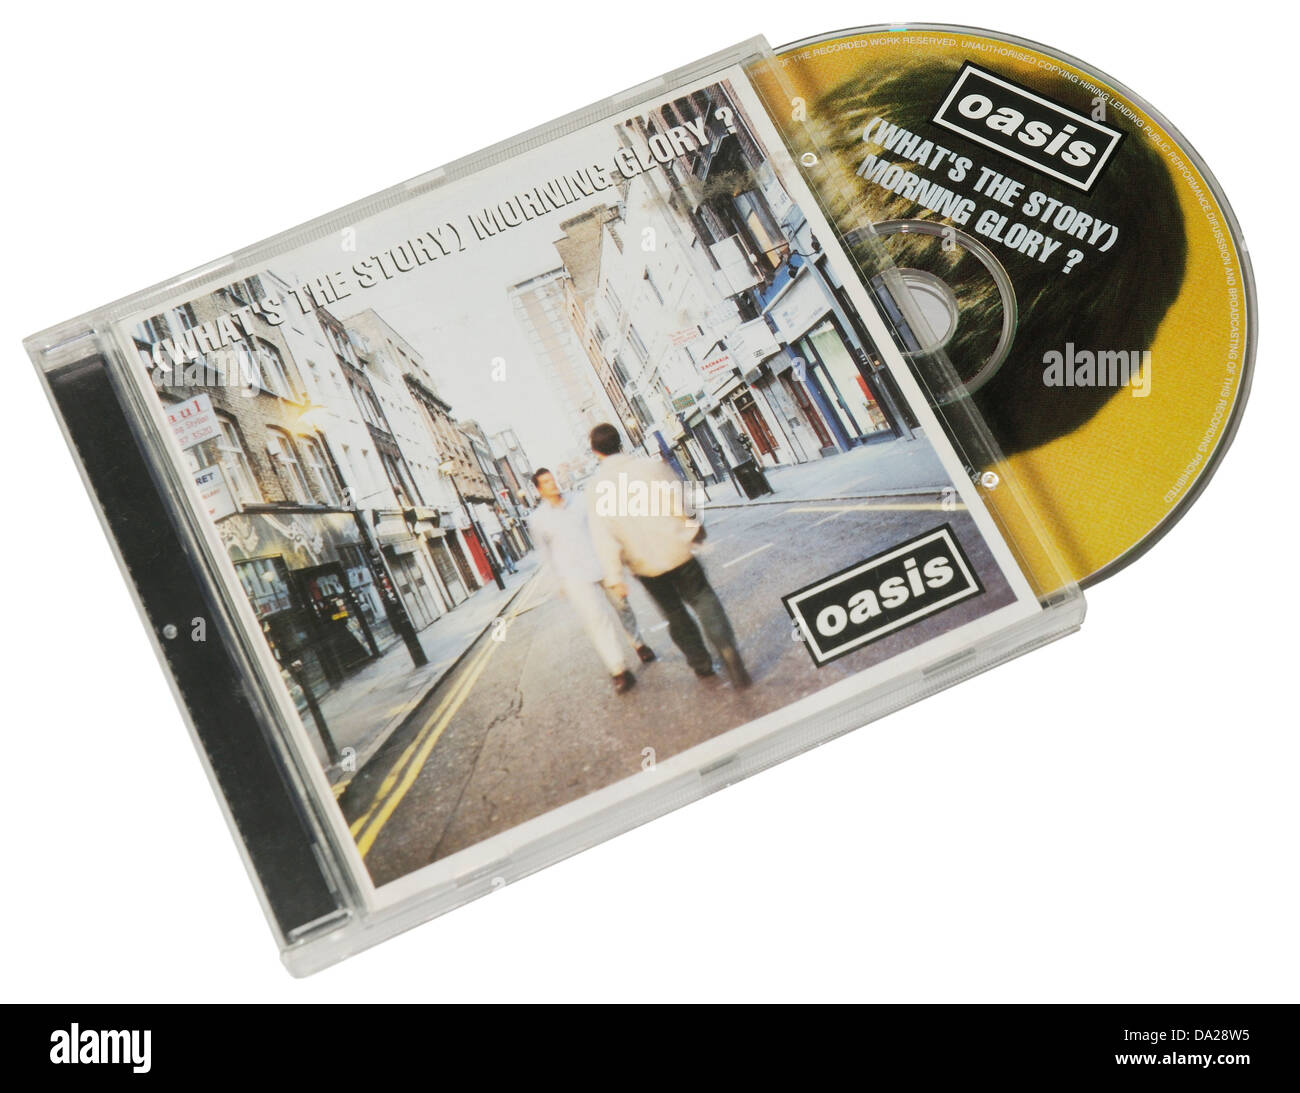 Oase-was ist die Story Morning Glory-Album auf CD Stockfoto